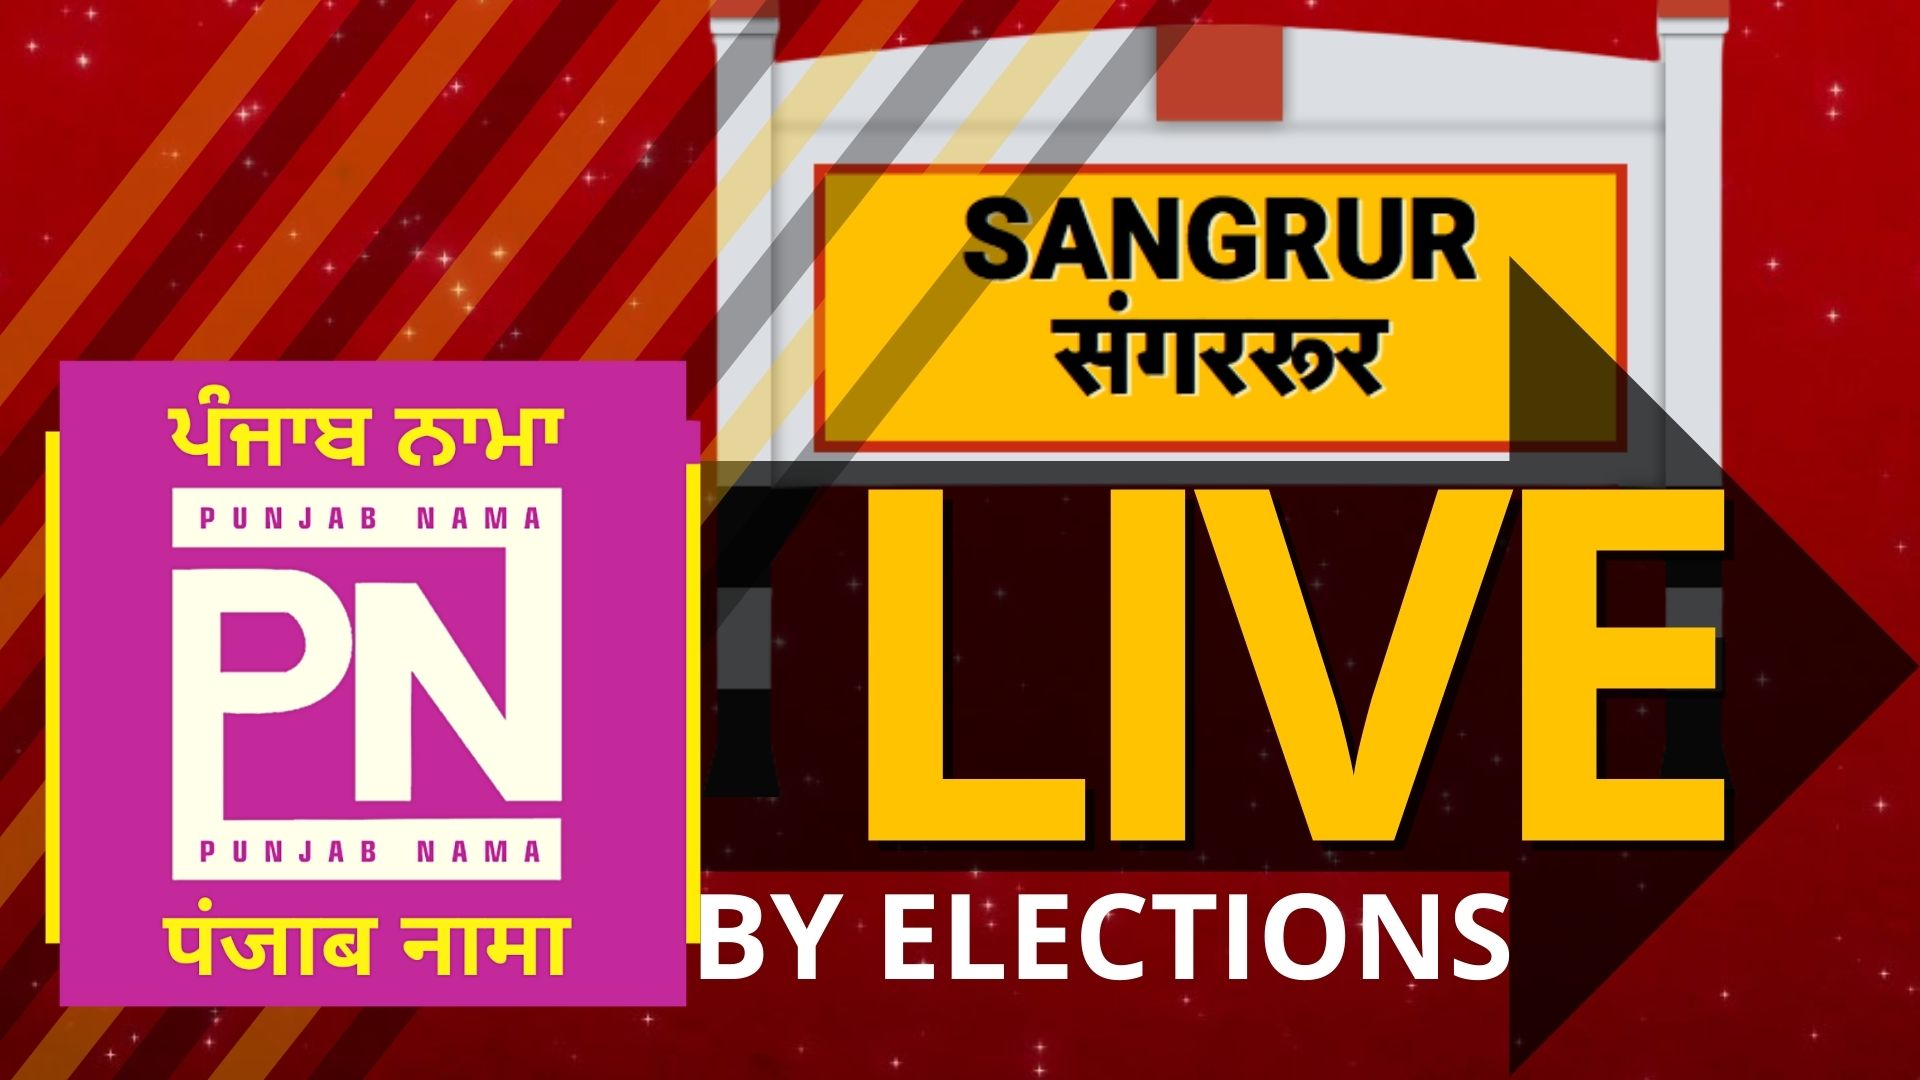 Live Sangrur By Elections: Updates ਸ਼ਾਮ 6 ਵਜੇ ਤੱਕ ਪੈਣਗੀਆਂ ਵੋਟਾਂ, 26 ਜੂਨ ਨੂੰ ਆਵੇਗਾ ਨਤੀਜਾ Thumbnail